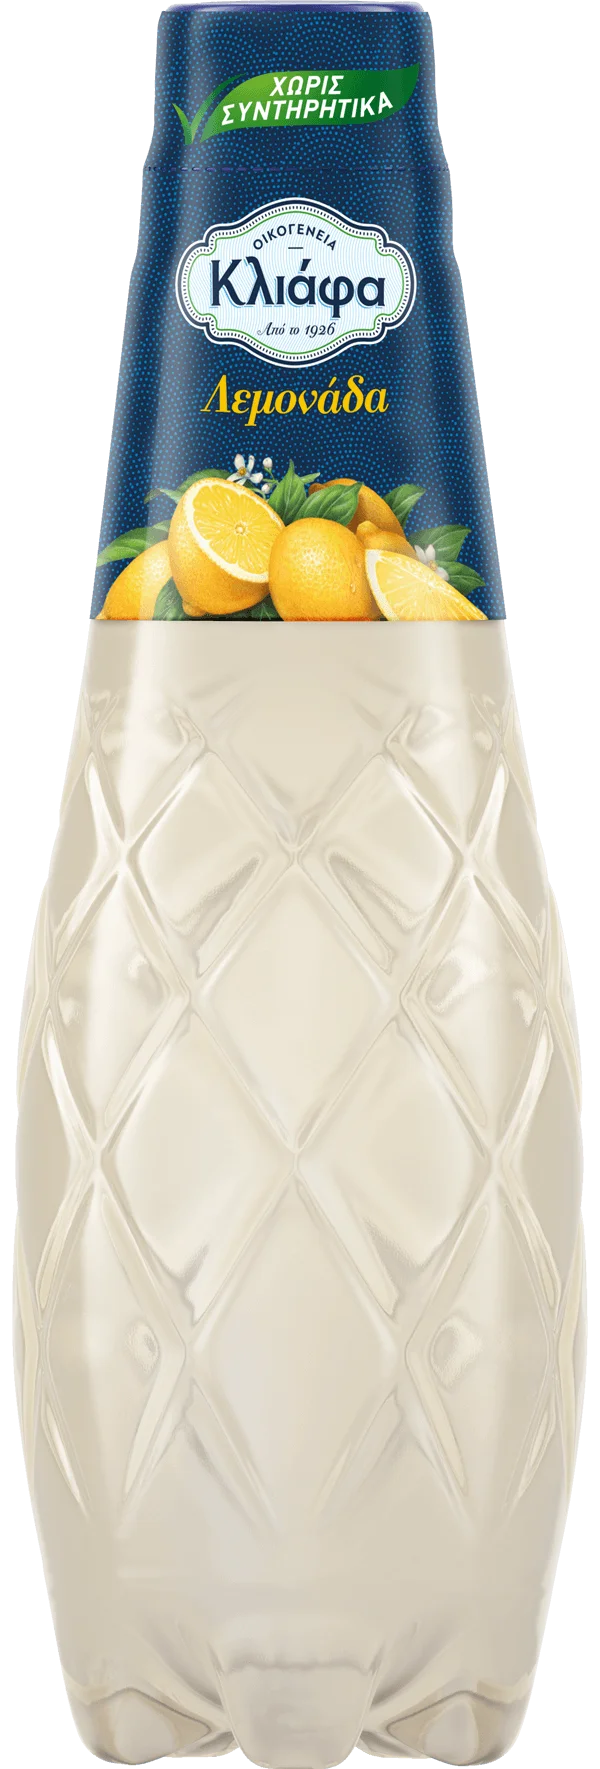 Kliafa Limonade Lemon Lemonada (inkl.Pfand) 330ml